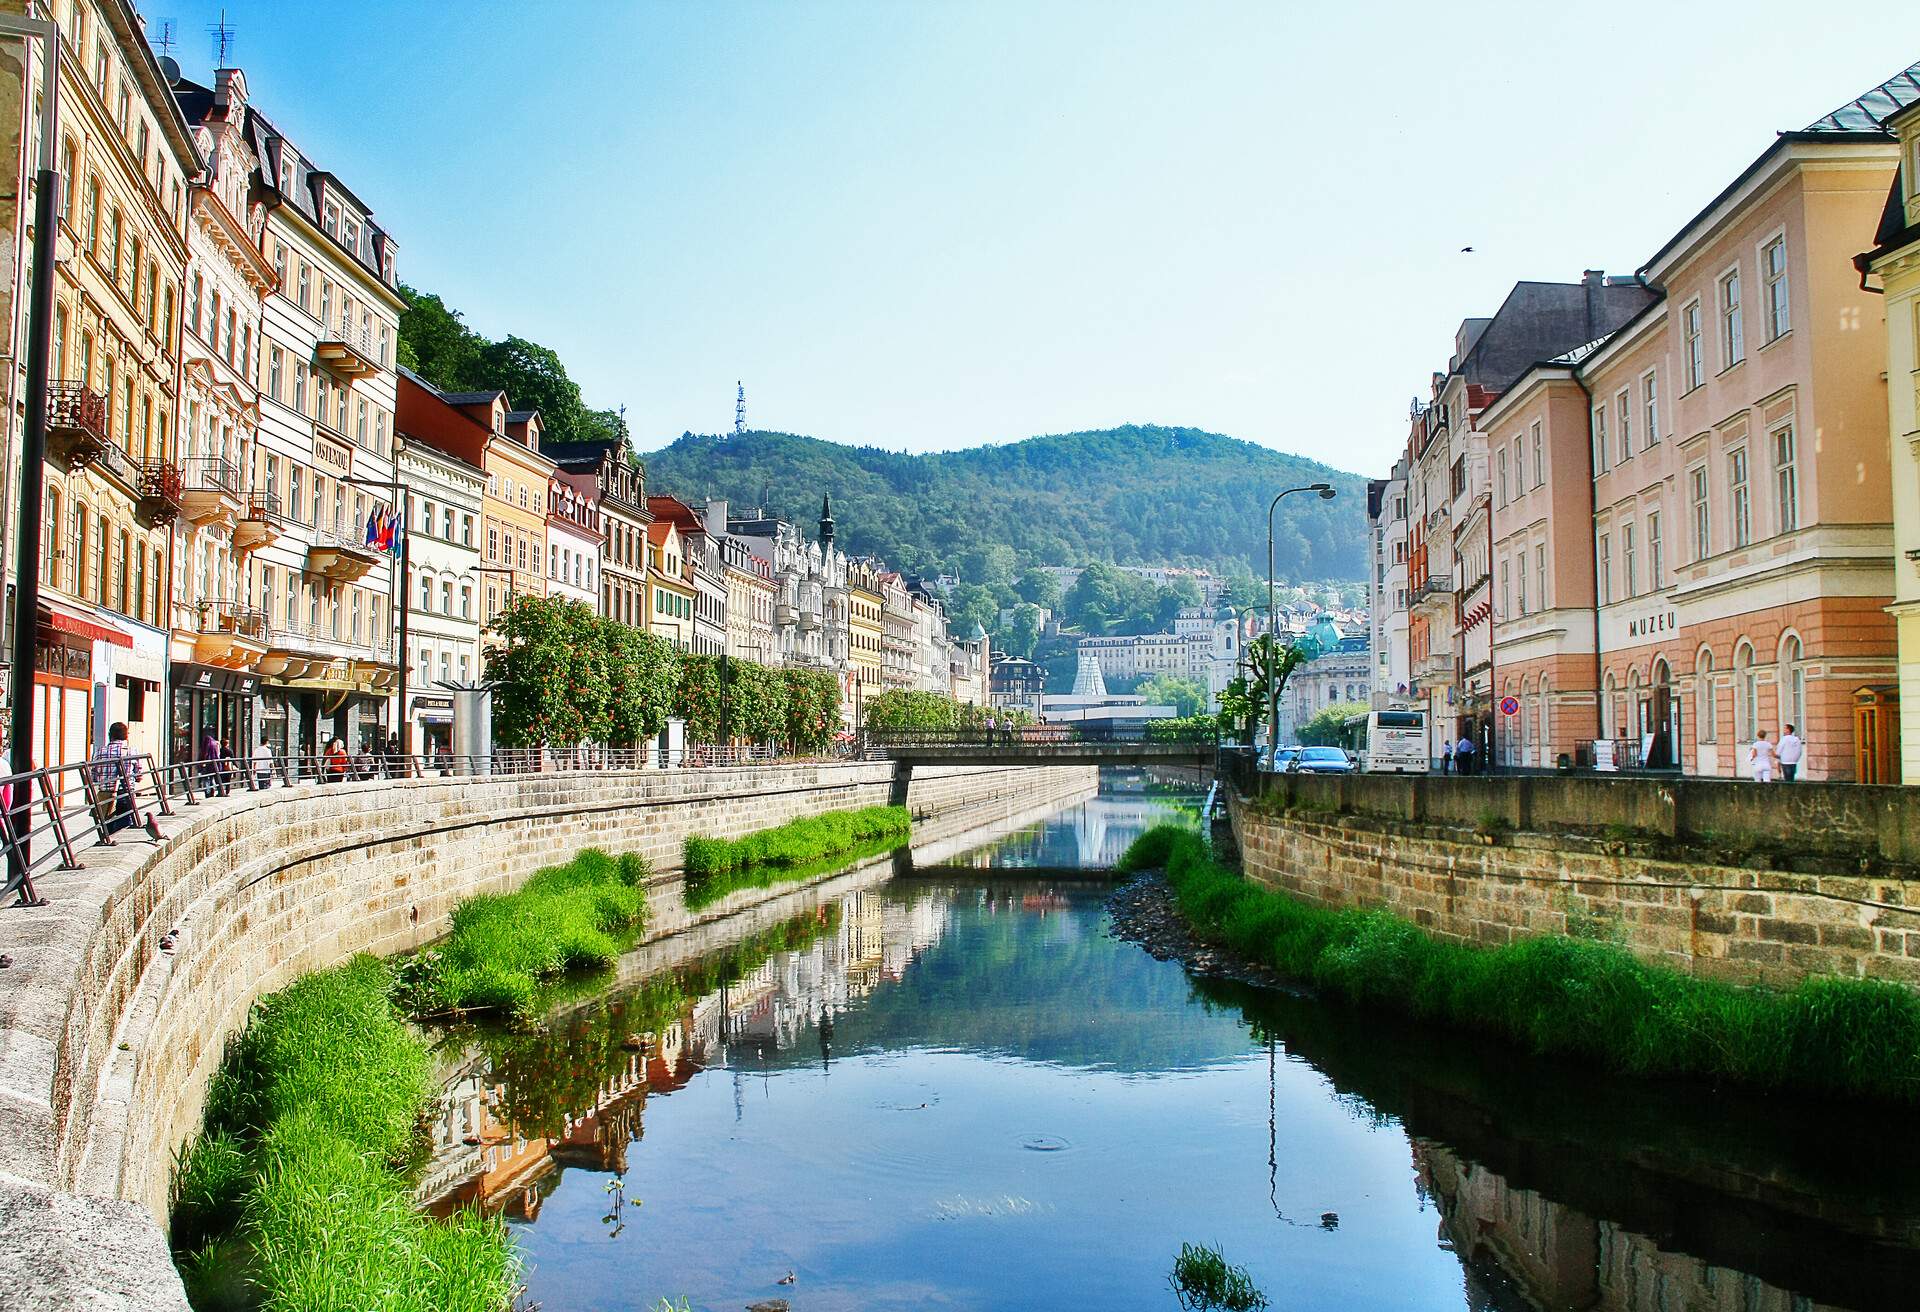 Cityscape of Karlovy Vary (Carlsbad) with Tepla river, Czech Republic, Bohemia region.